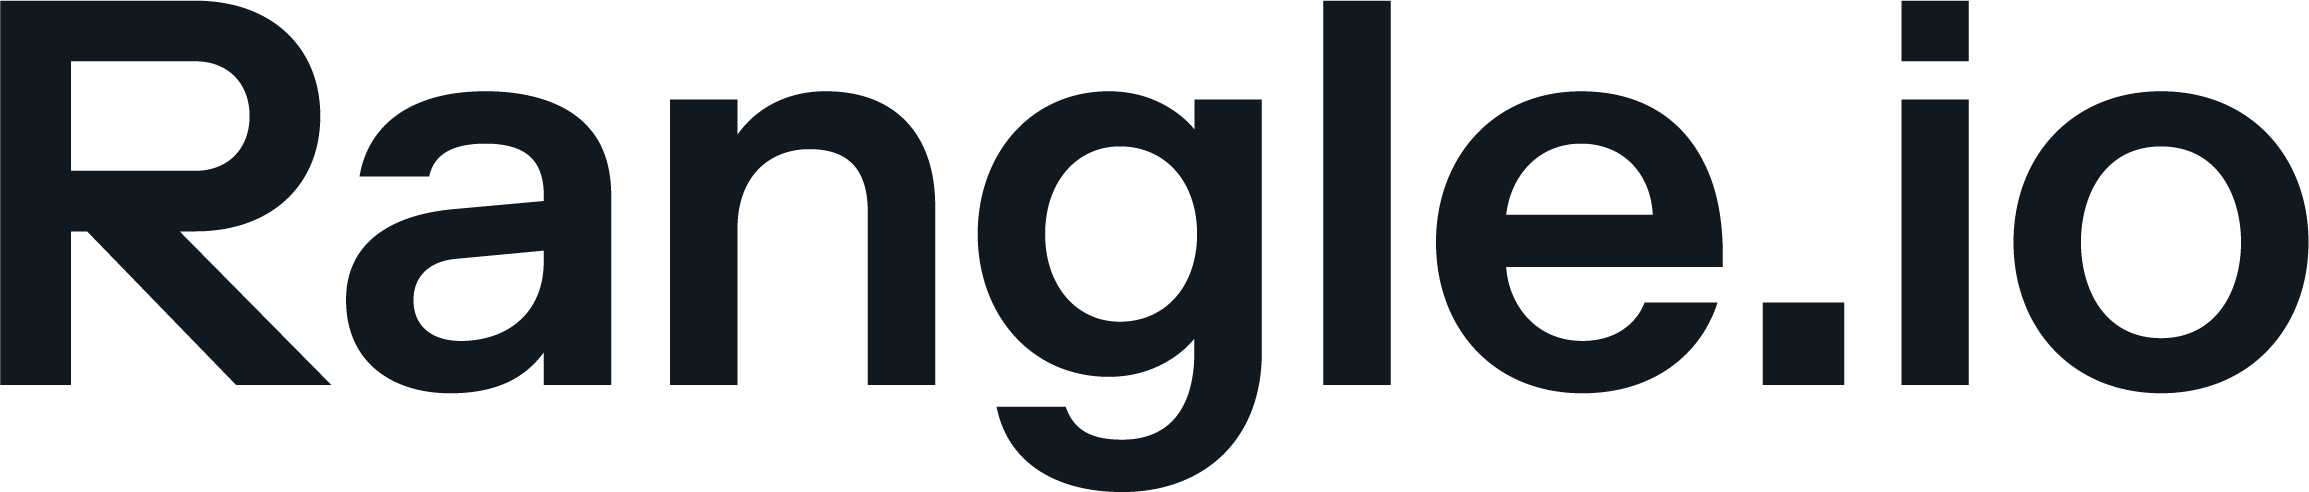 rangle logo